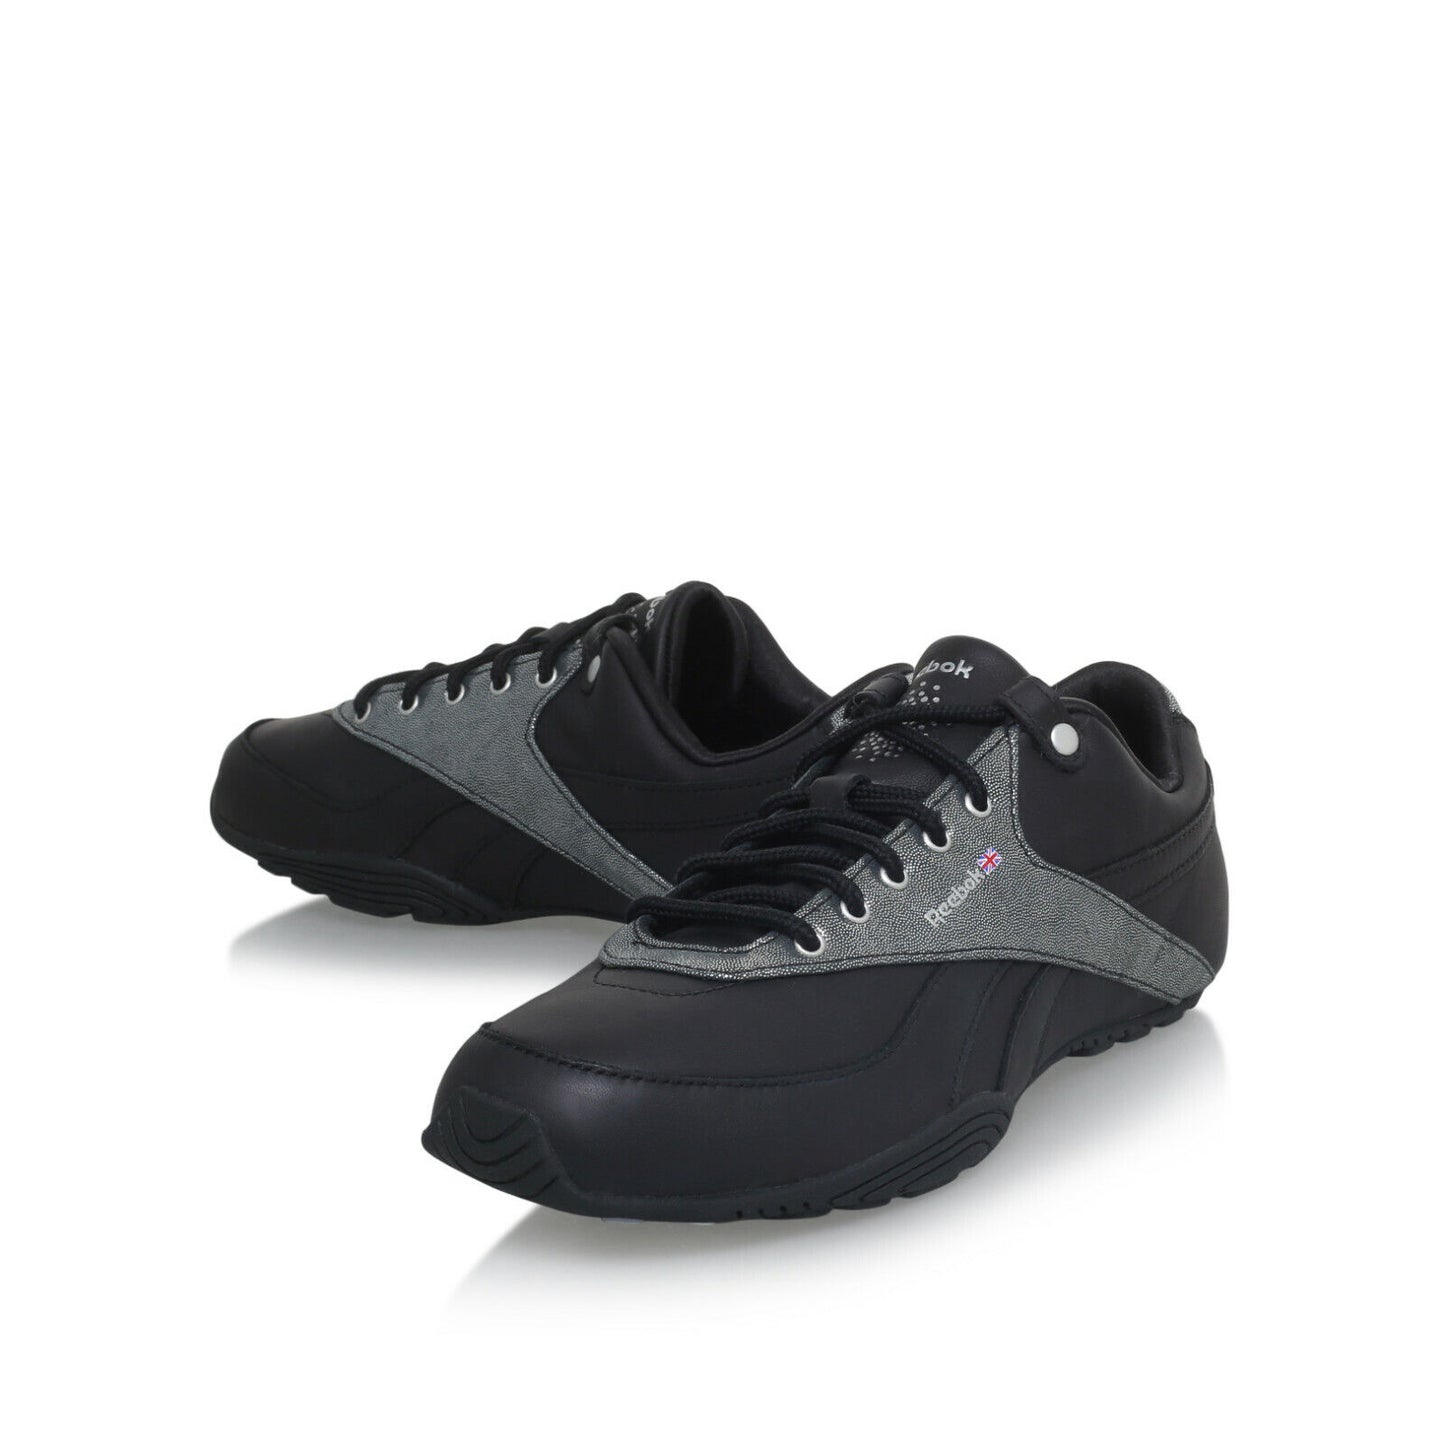 SALE Reebok Womens Oshen Casual Trainers Leather Girls Black SIZE 4.5 5.5 UK £60